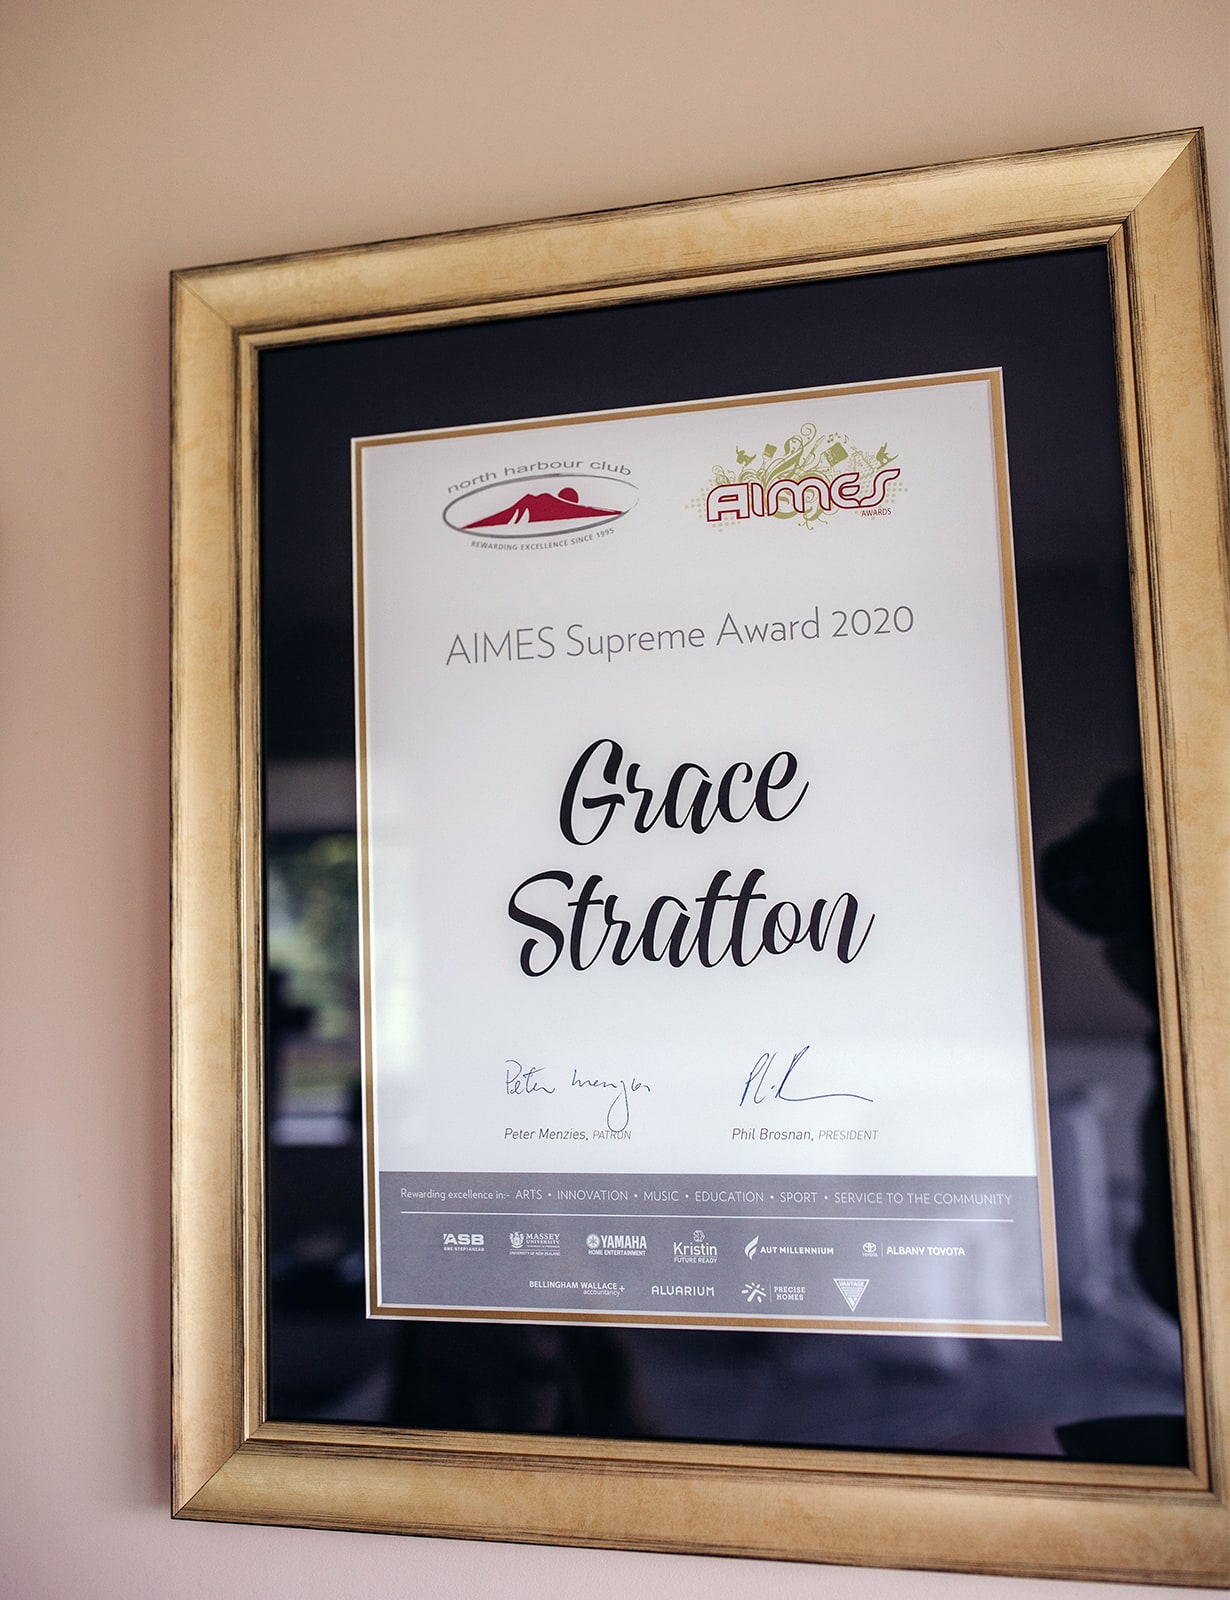 Grace Stratton's AIMES Supreme Award in 2020 framed certificate